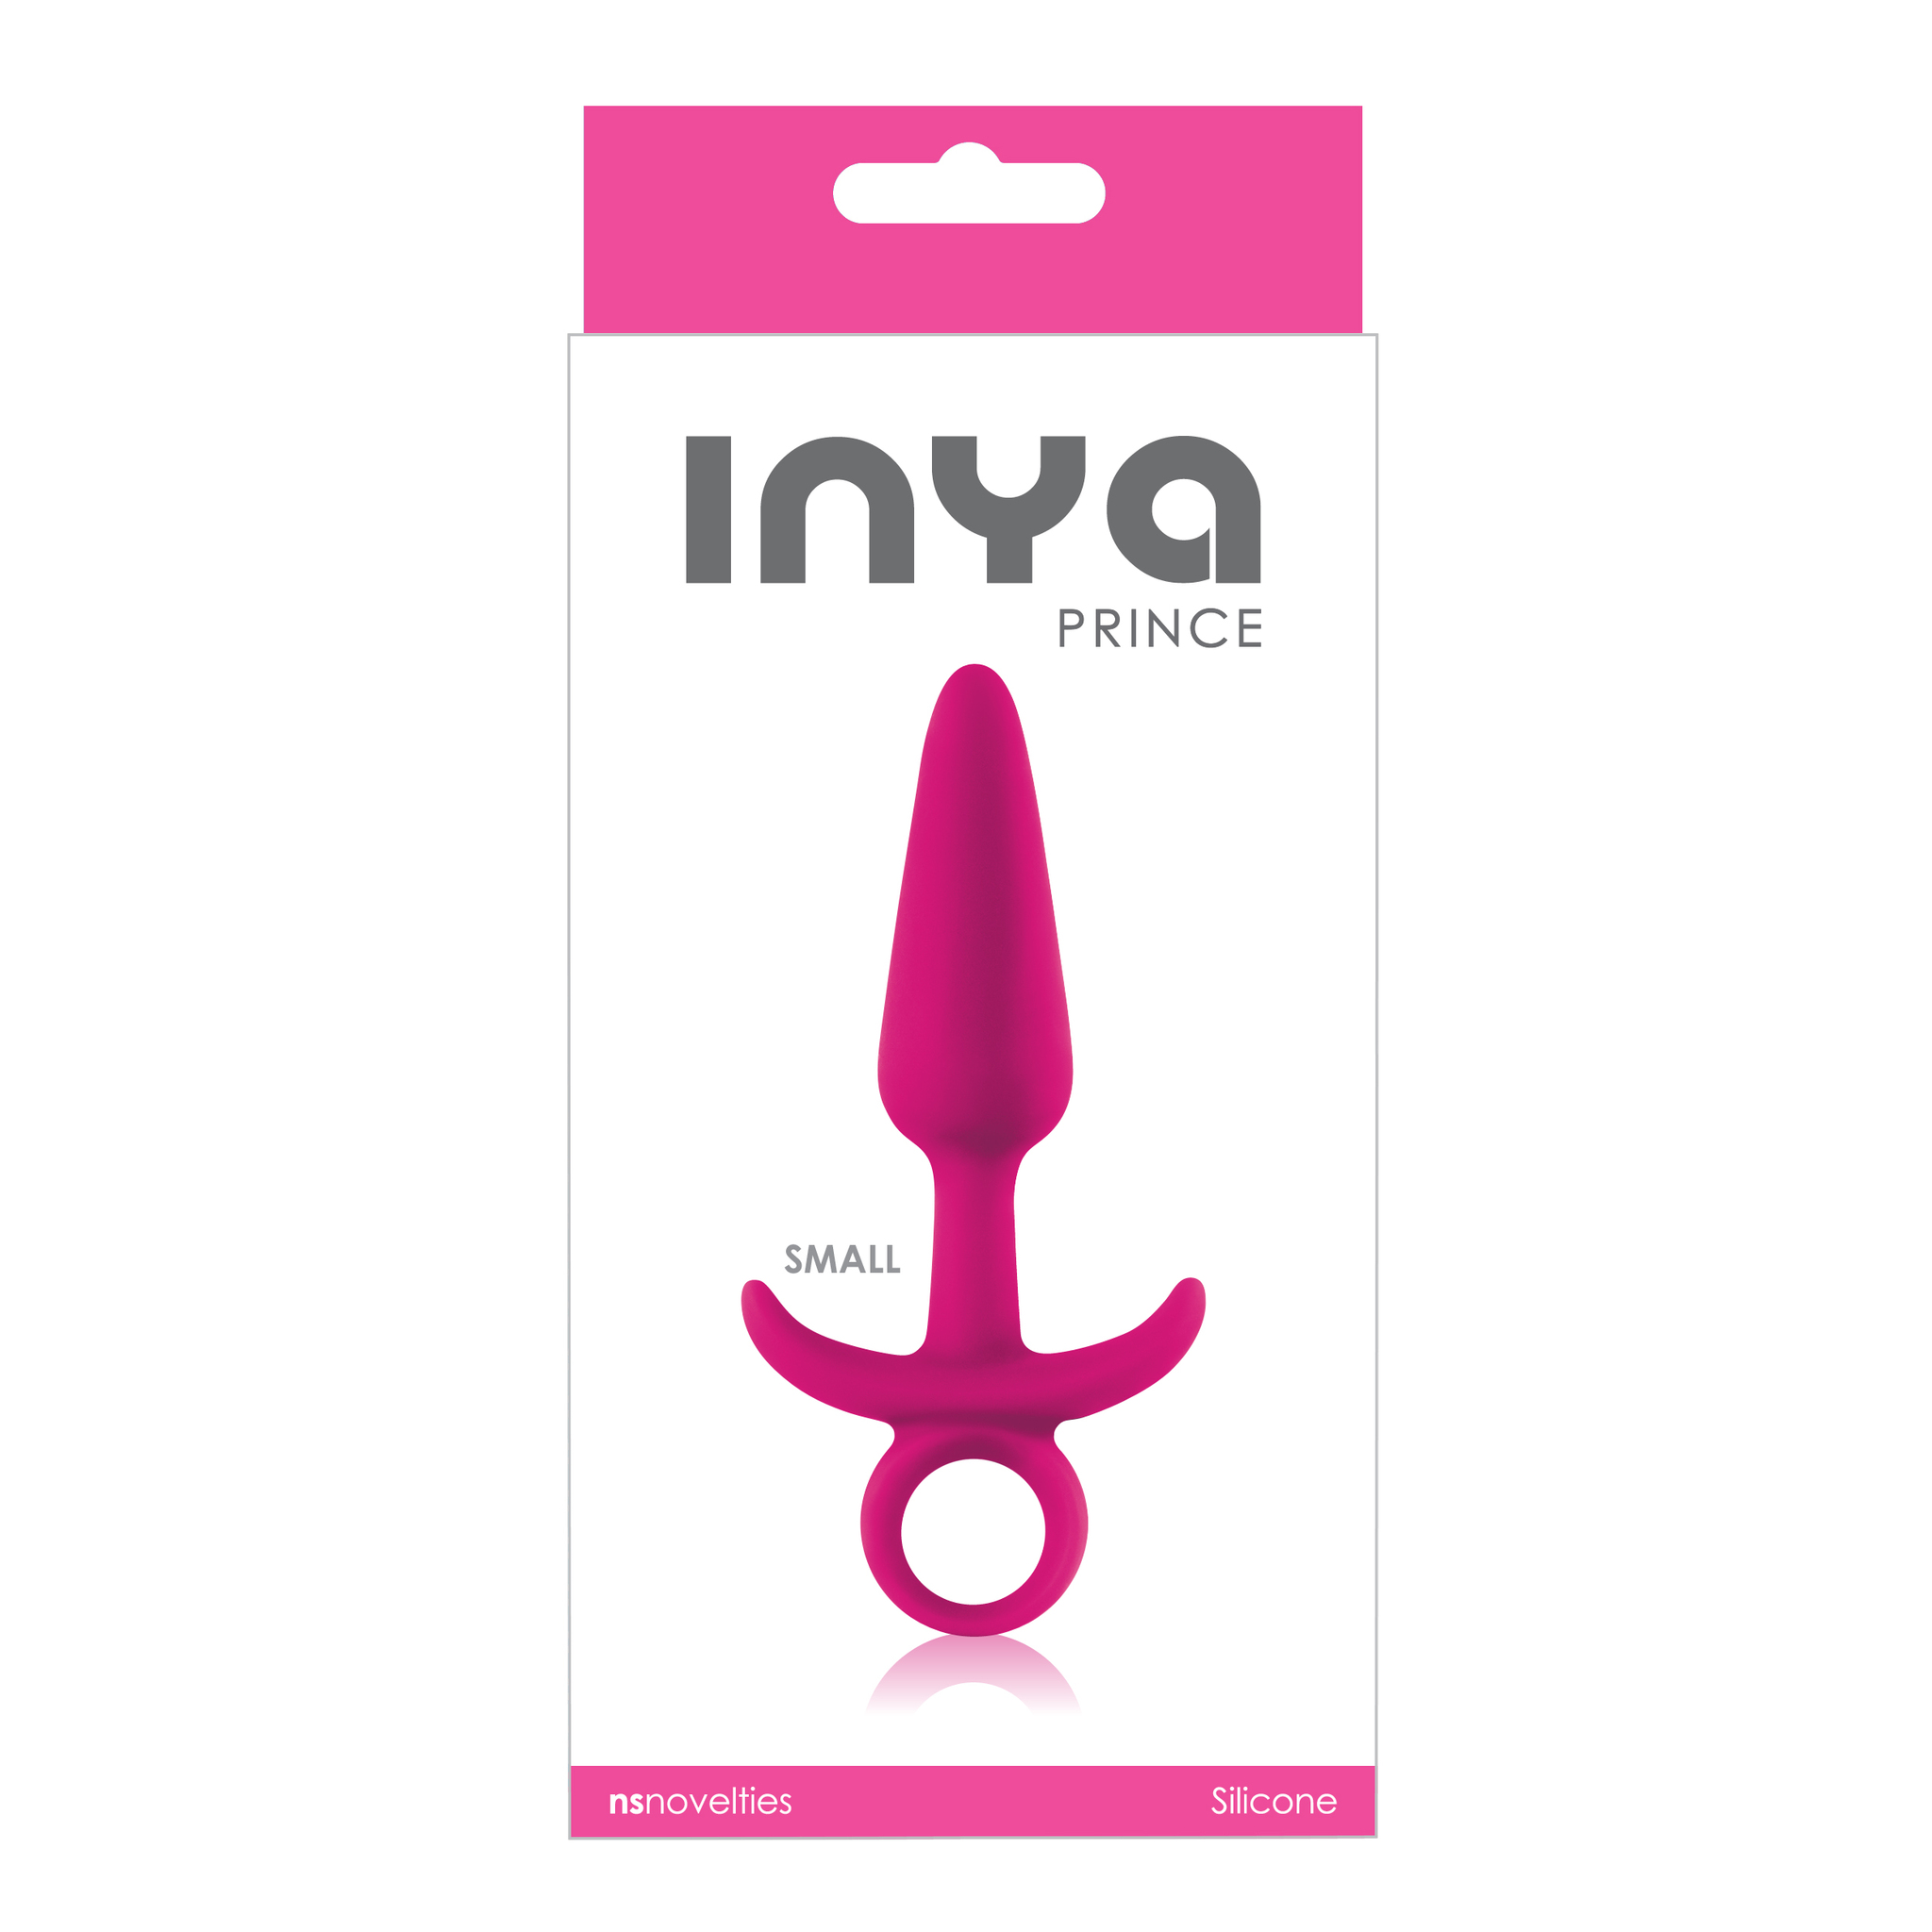 Inya - Prince, small pink